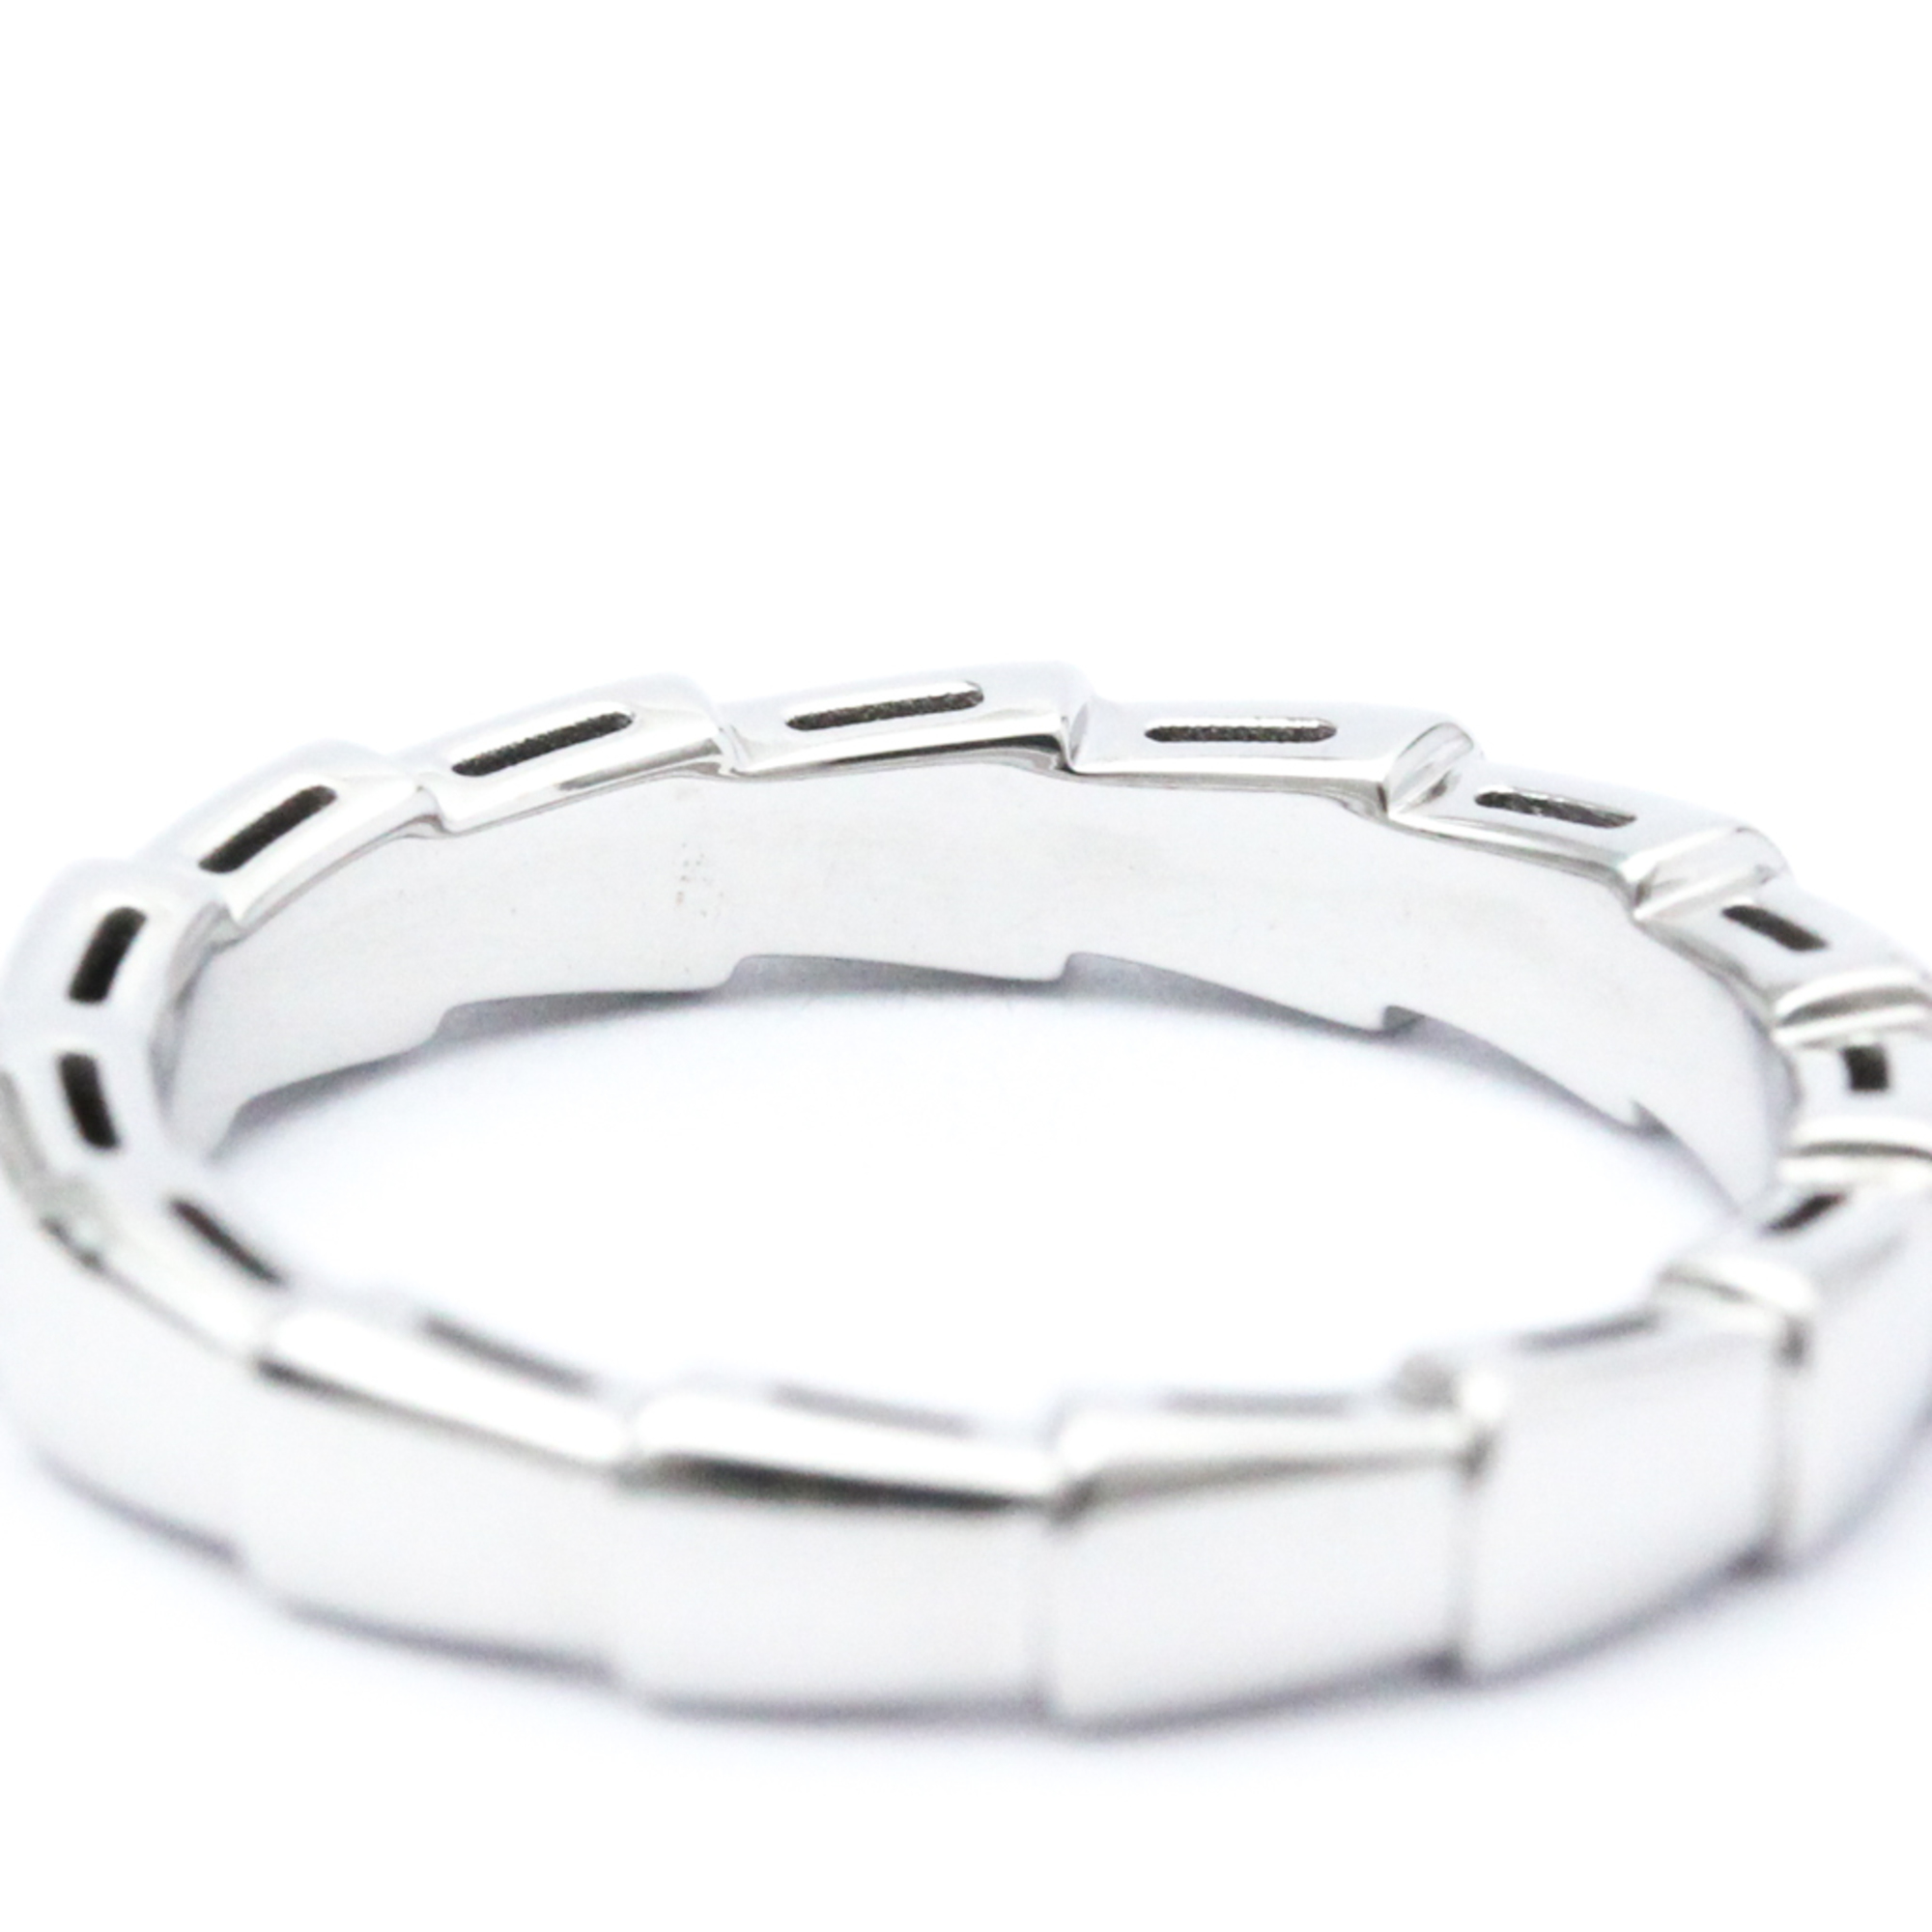 Bvlgari Serpenti Viper Ring 349686 White Gold (18K) Fashion No Stone Band Ring Silver